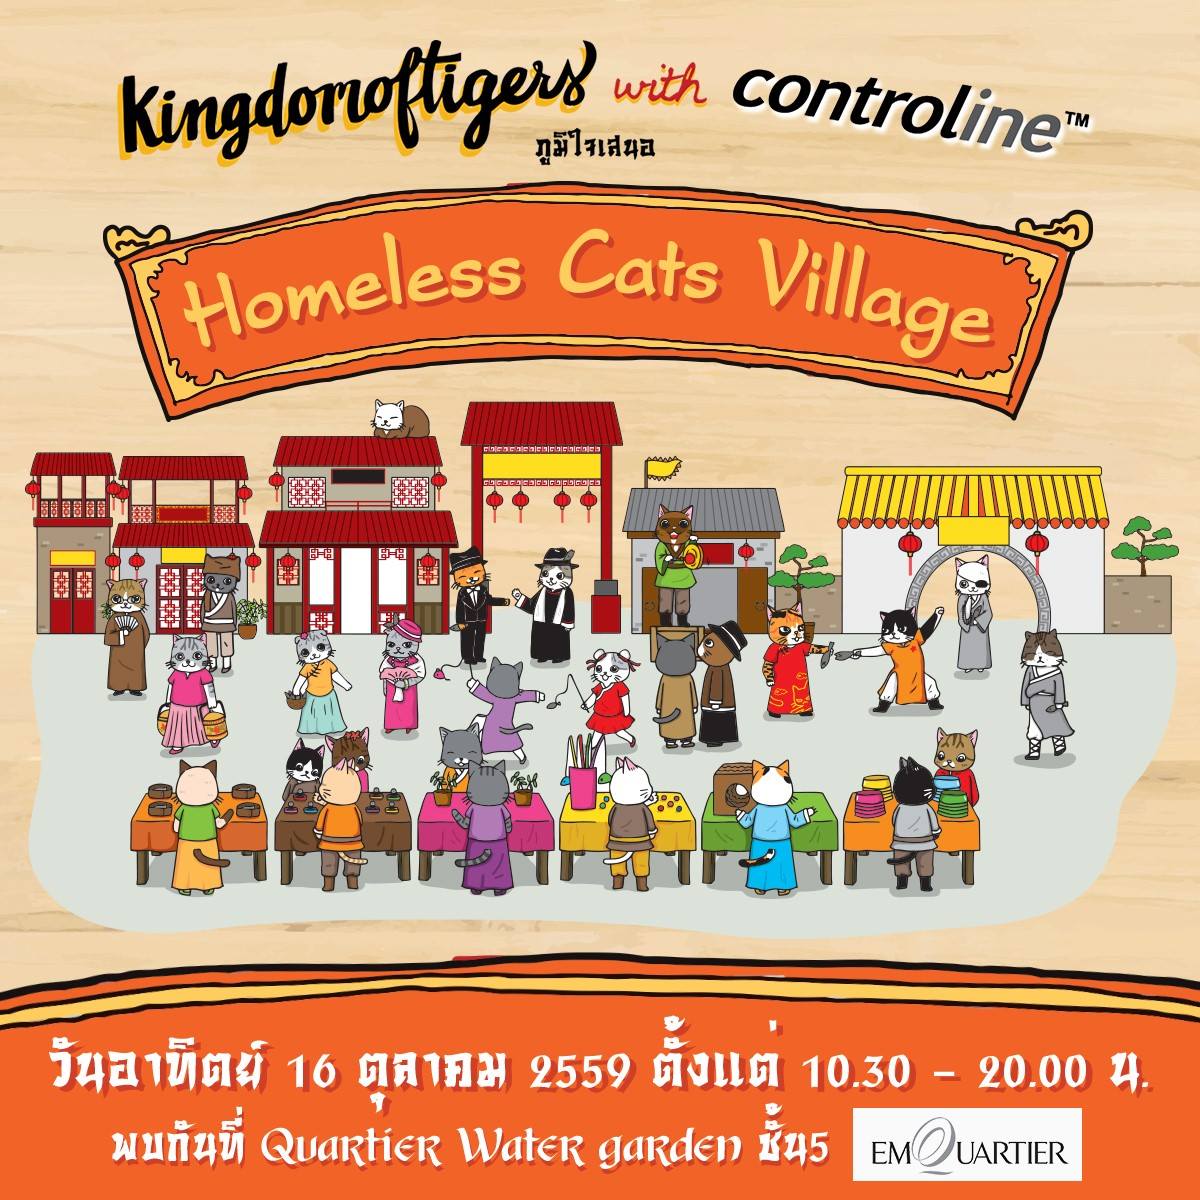 Kingdomoftigers With Controline ภูมิใจเสนอ Homeless Cats Village